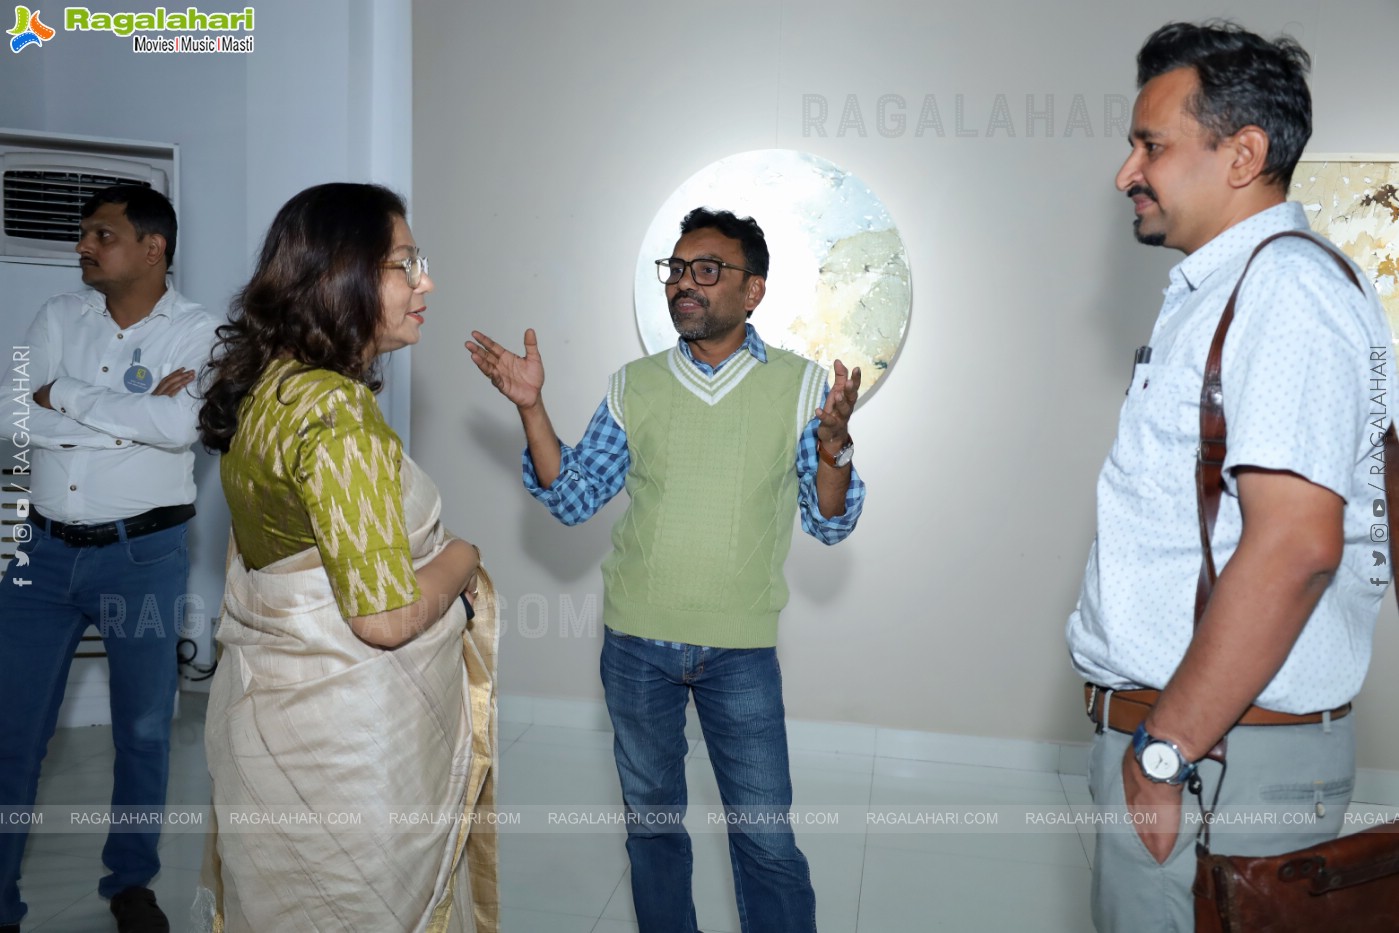 Kalakriti Art Gallery Presents 'Ways of Seeing' by Madhuri Kathe